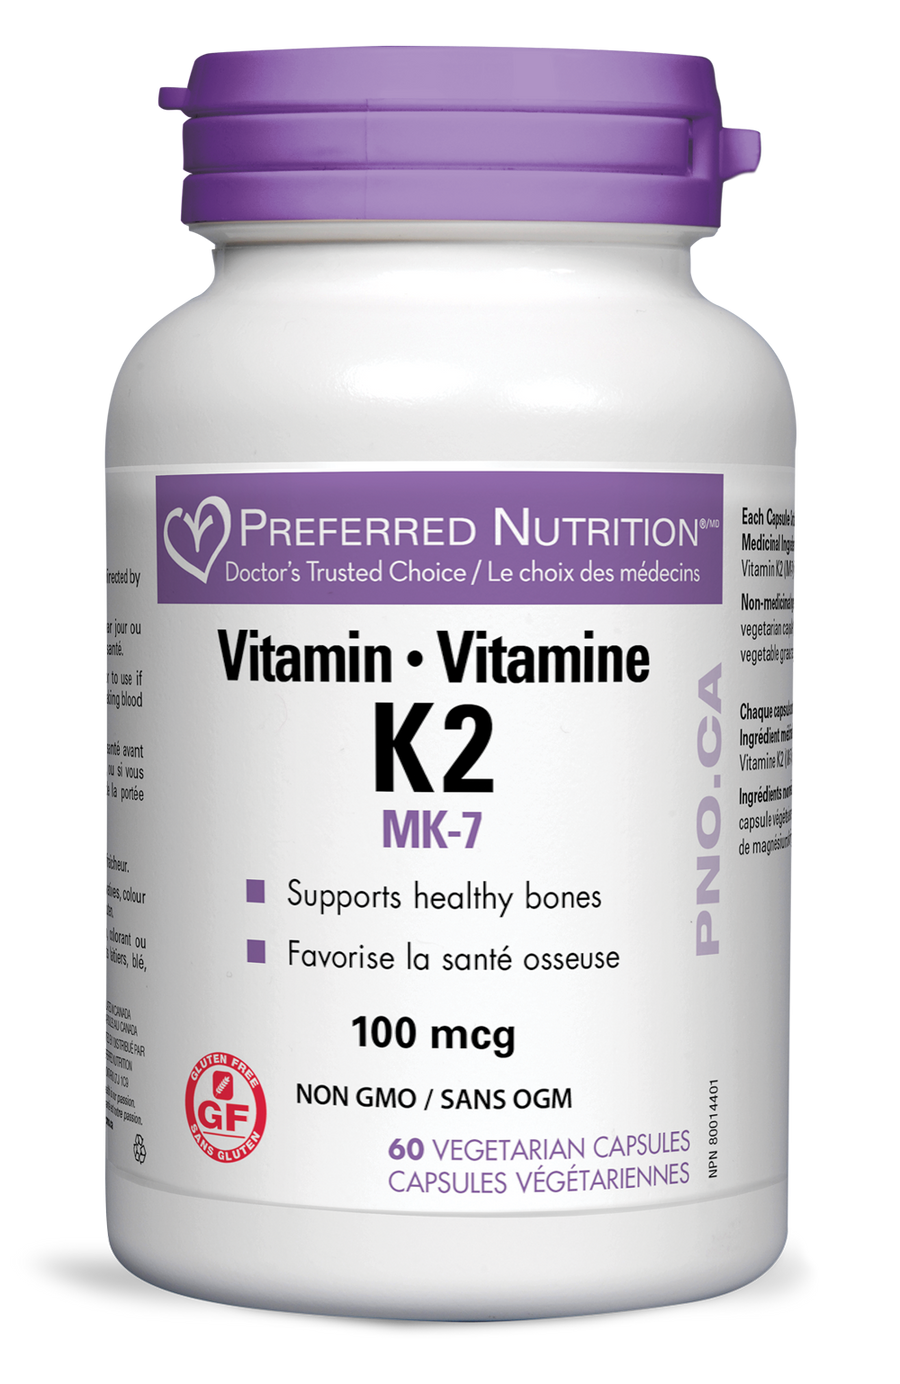 Preferred Nutrition Vitamin K2 100 mcg 60 Veg. Capsules